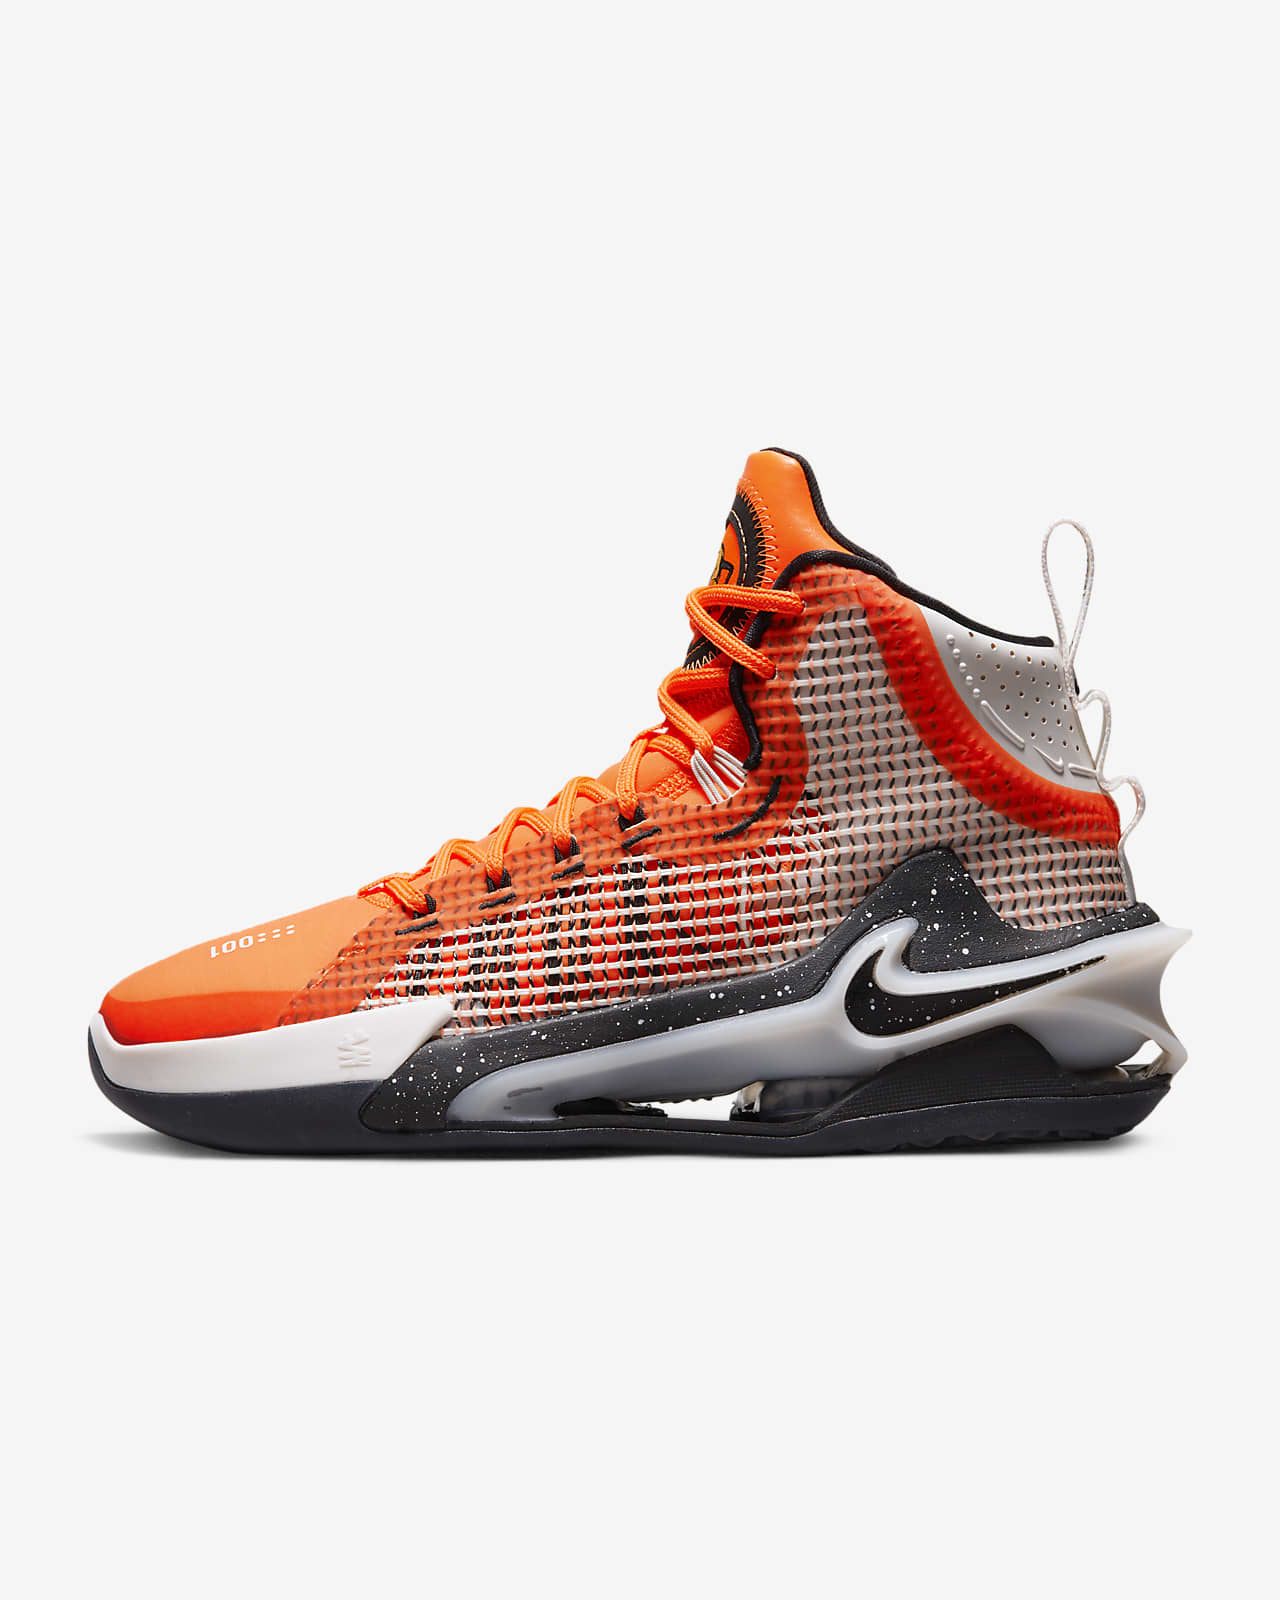 Nike Basketball Shoes. JP